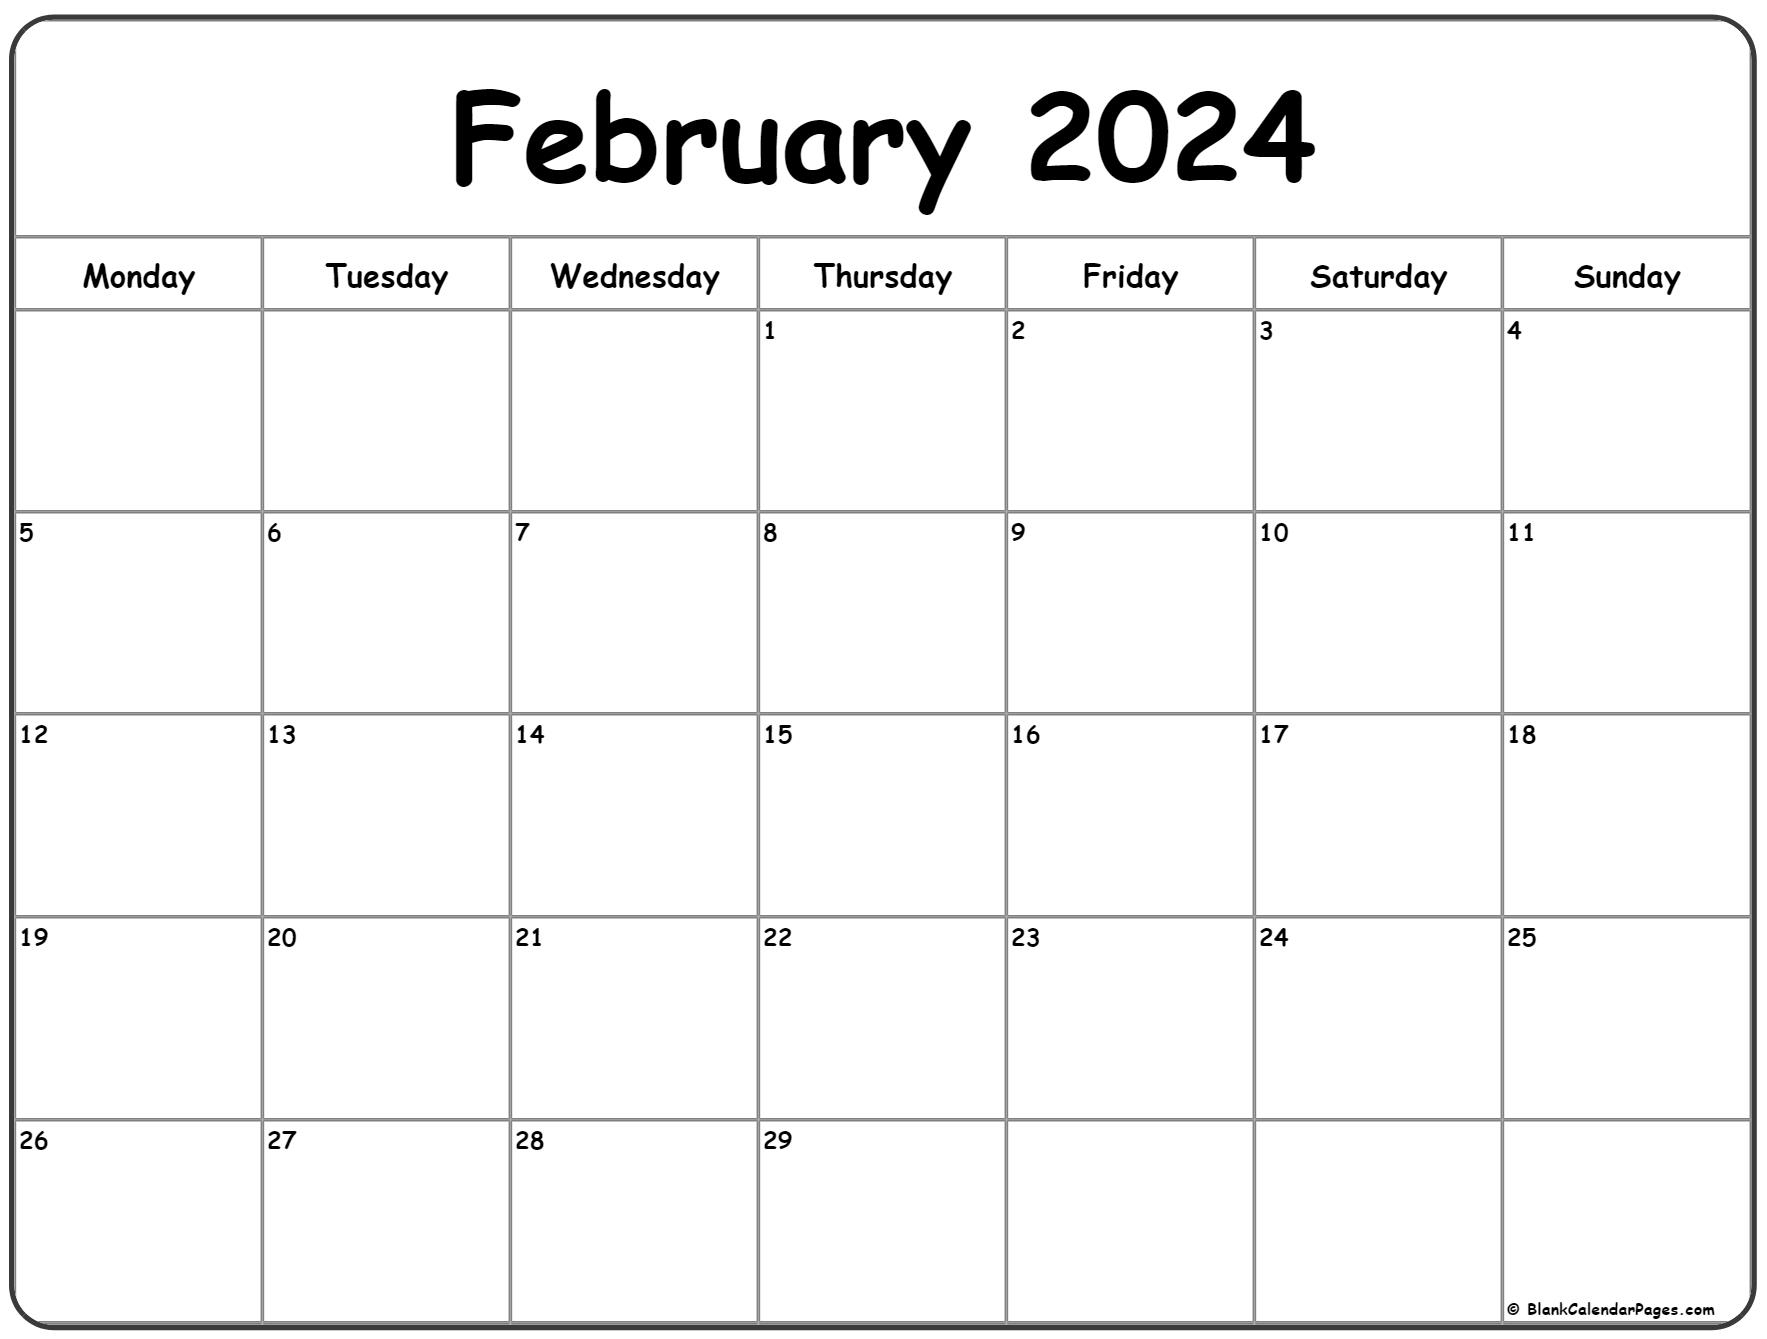 February 2024 Monday Calendar | Monday To Sunday for February Calendar Free Printable 2024